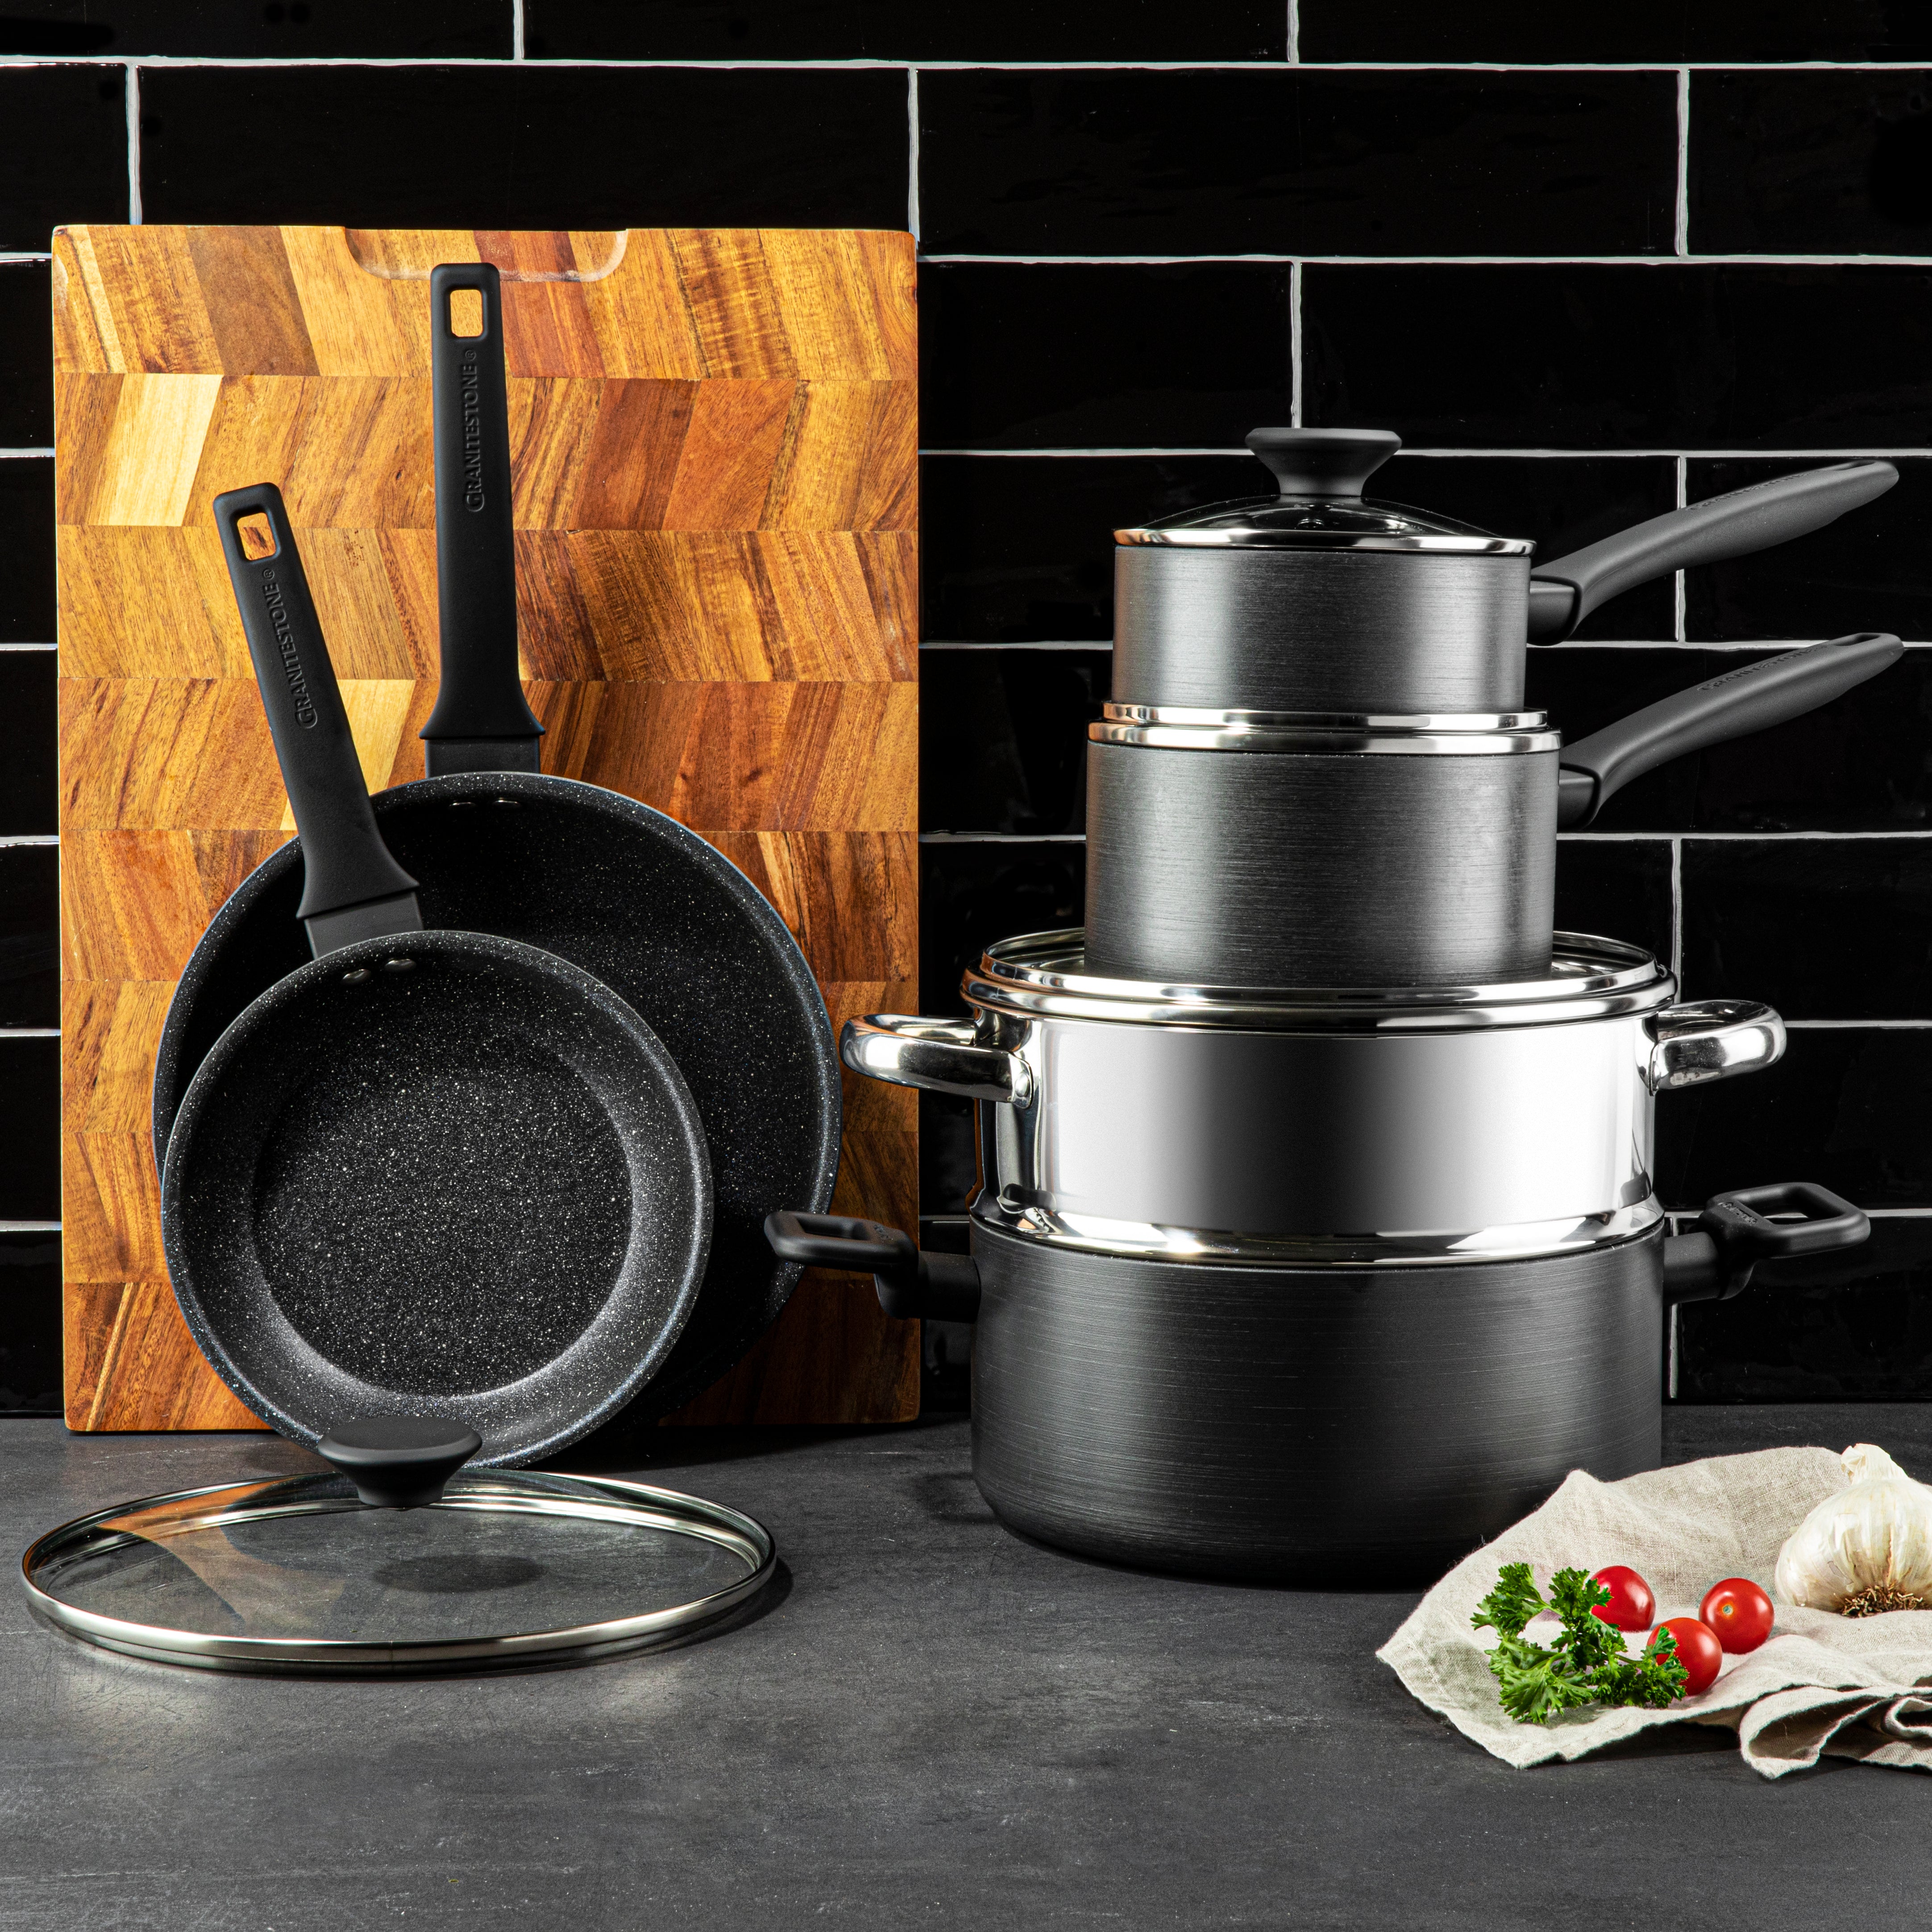 17-Piece Kitchen Granite Cookware Set, Non-Stick Cooking Pots and Pans Set - Black